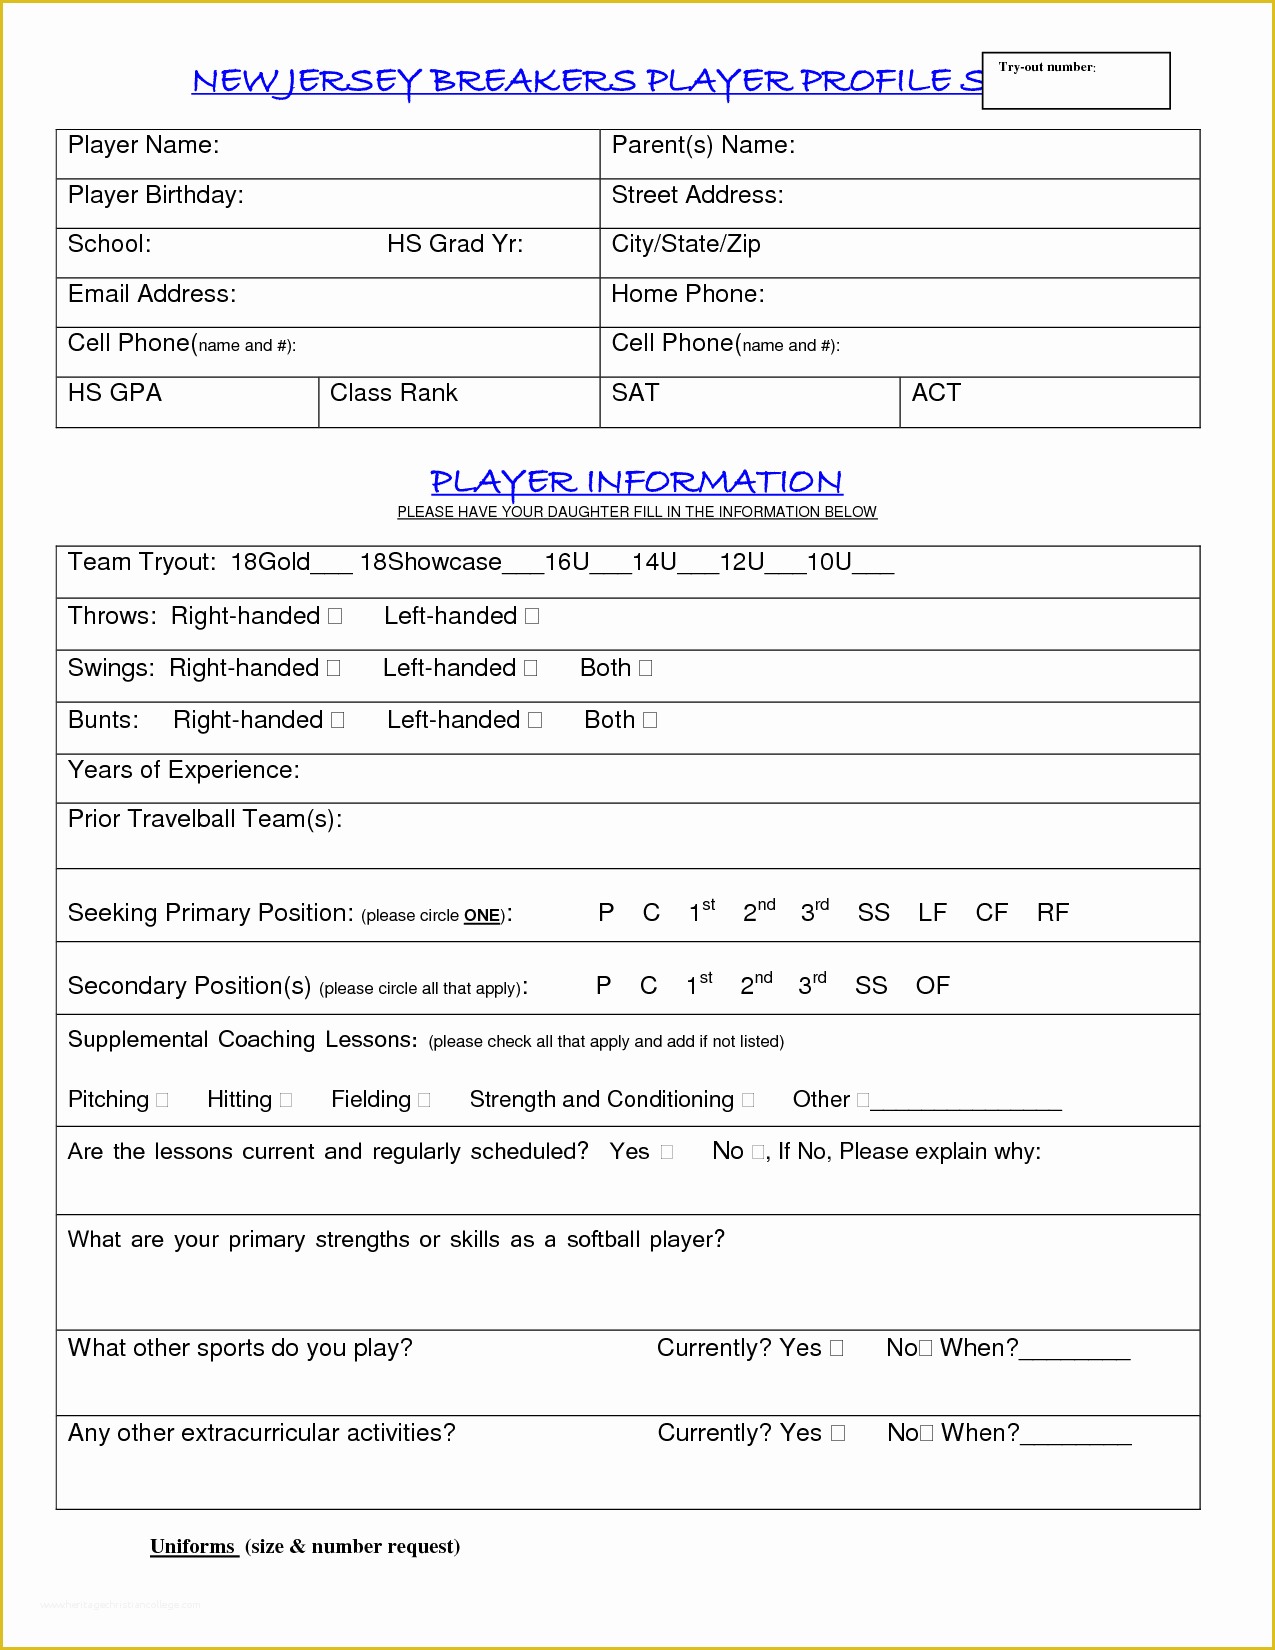 Athlete Profile Template Free Of 98 softball Player Profile Template 12u Strider Player